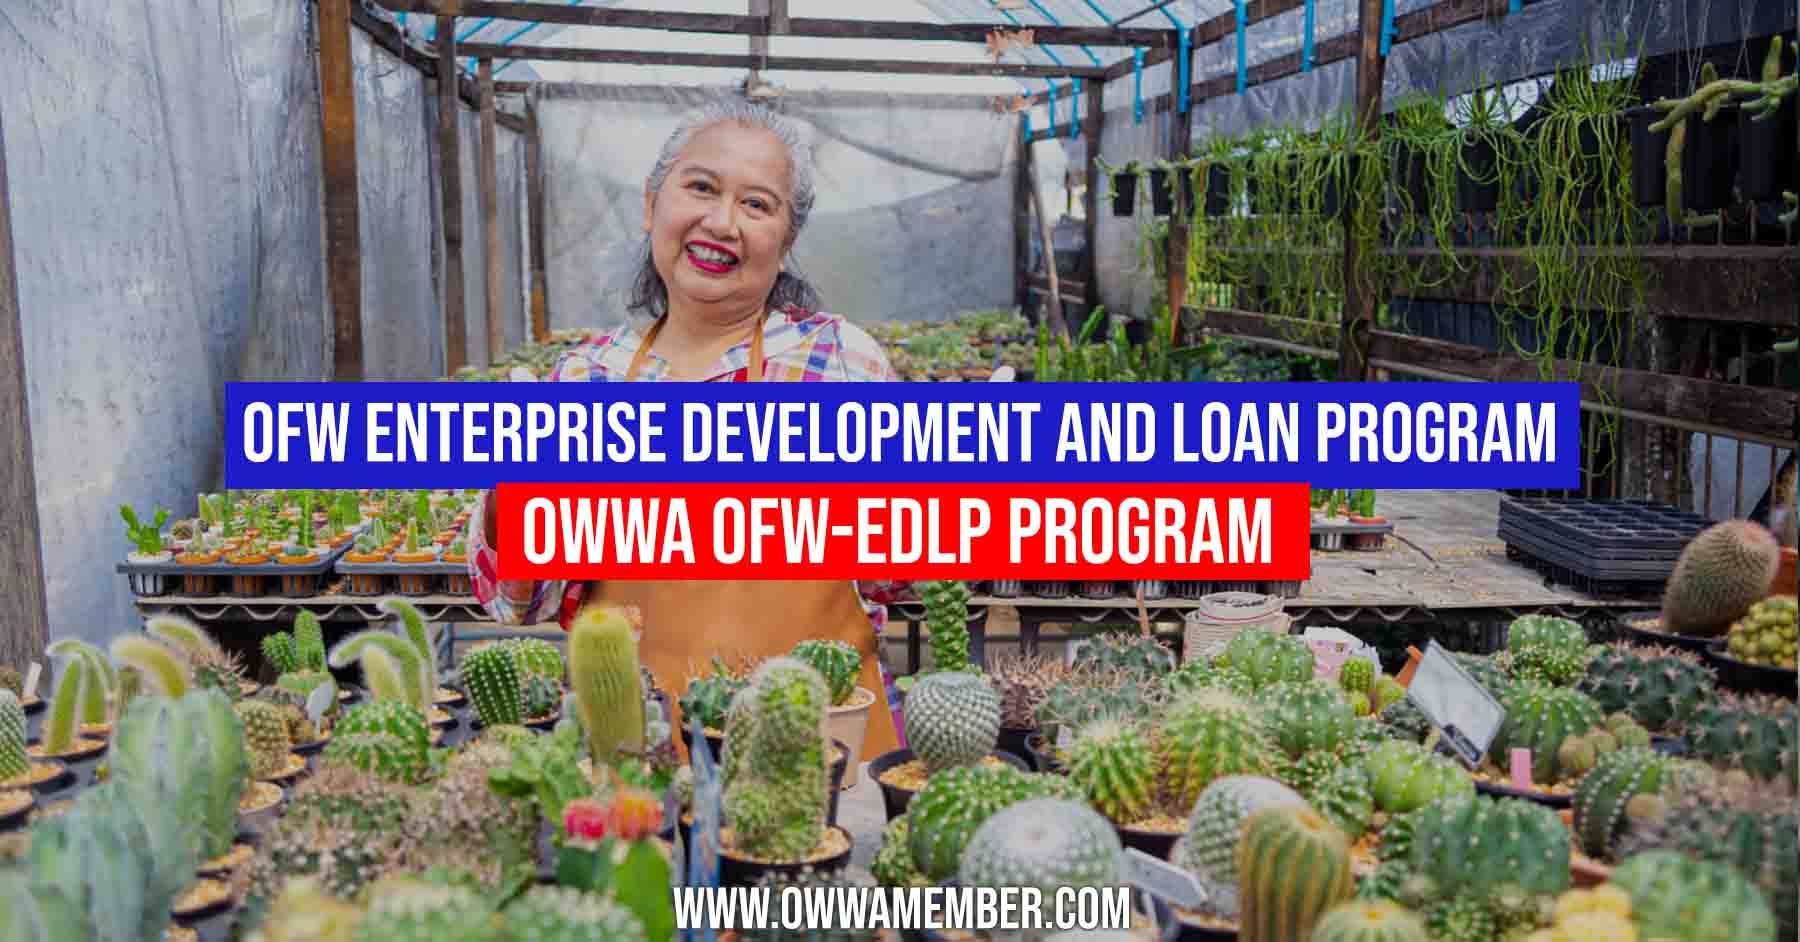 OFW EDLP program Enterprise loan program